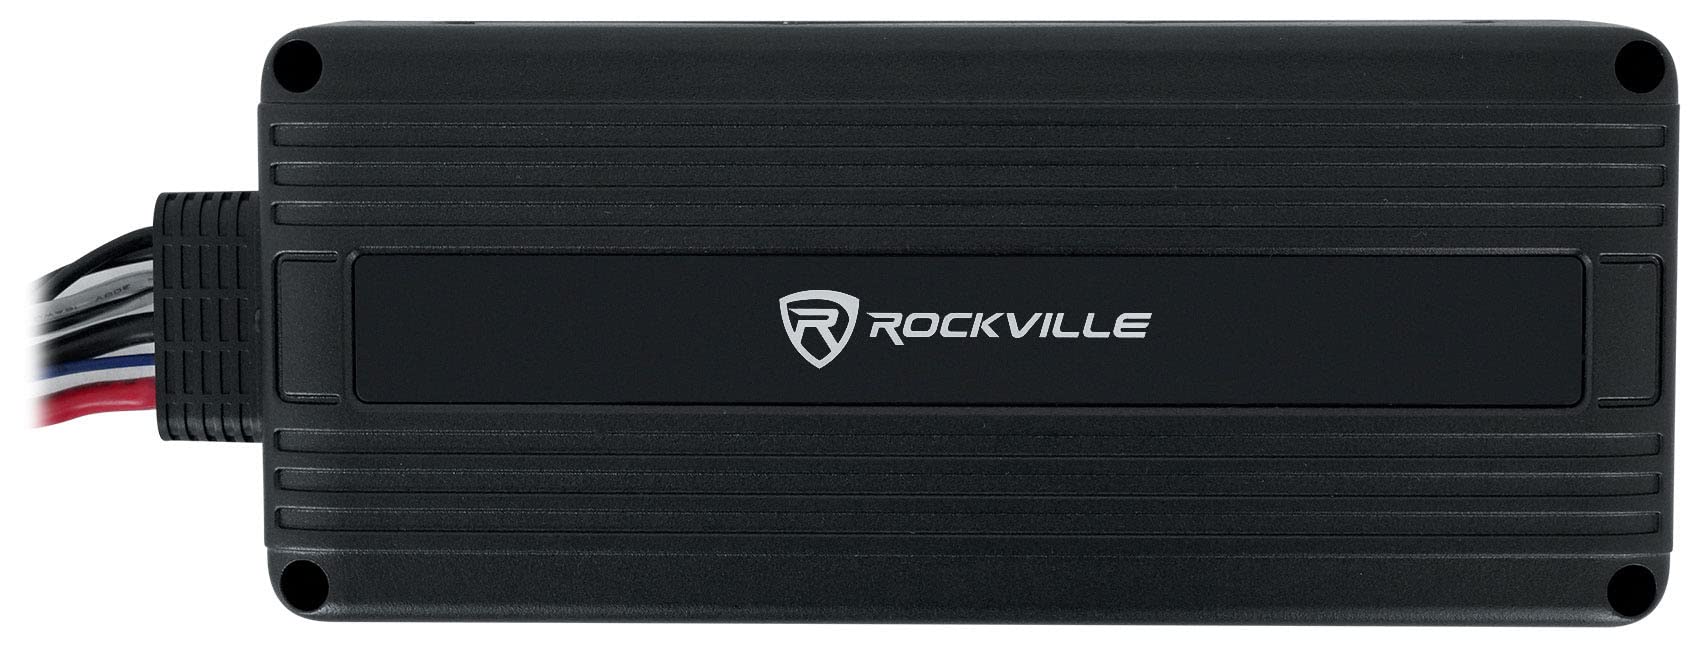 Rockville ATV220 2 Channel UTV/Motorcycle Bluetooth Amplifier IP65 Micro Amp